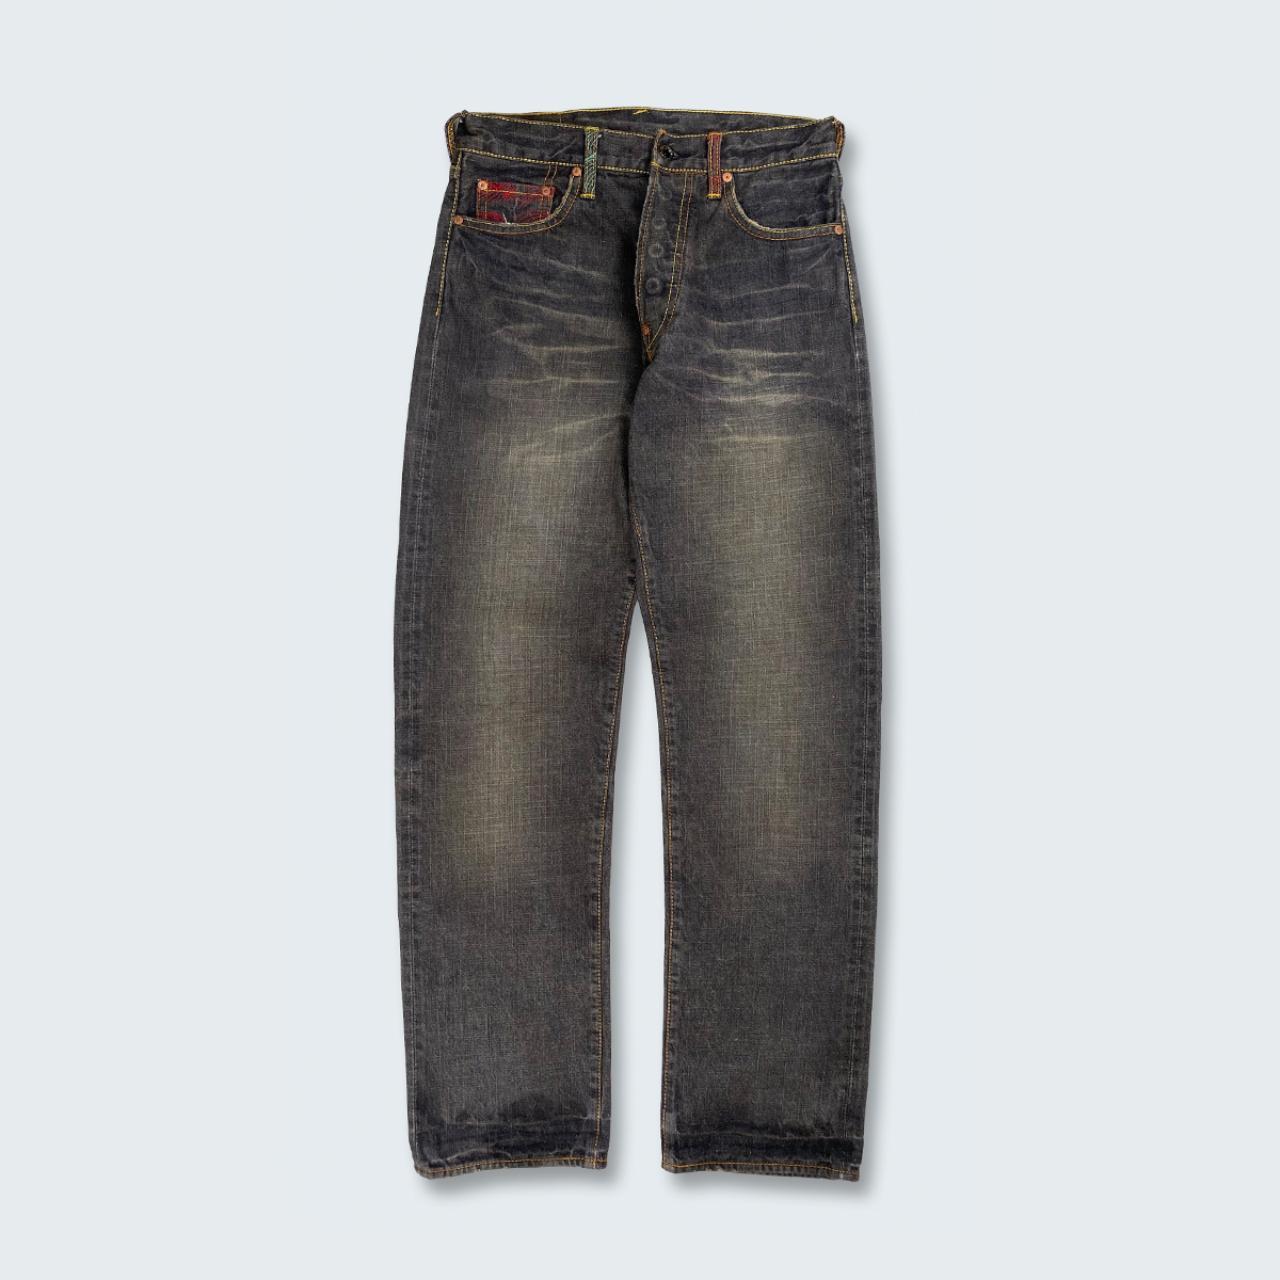 Authentic Vintage RMC Jeans (30")